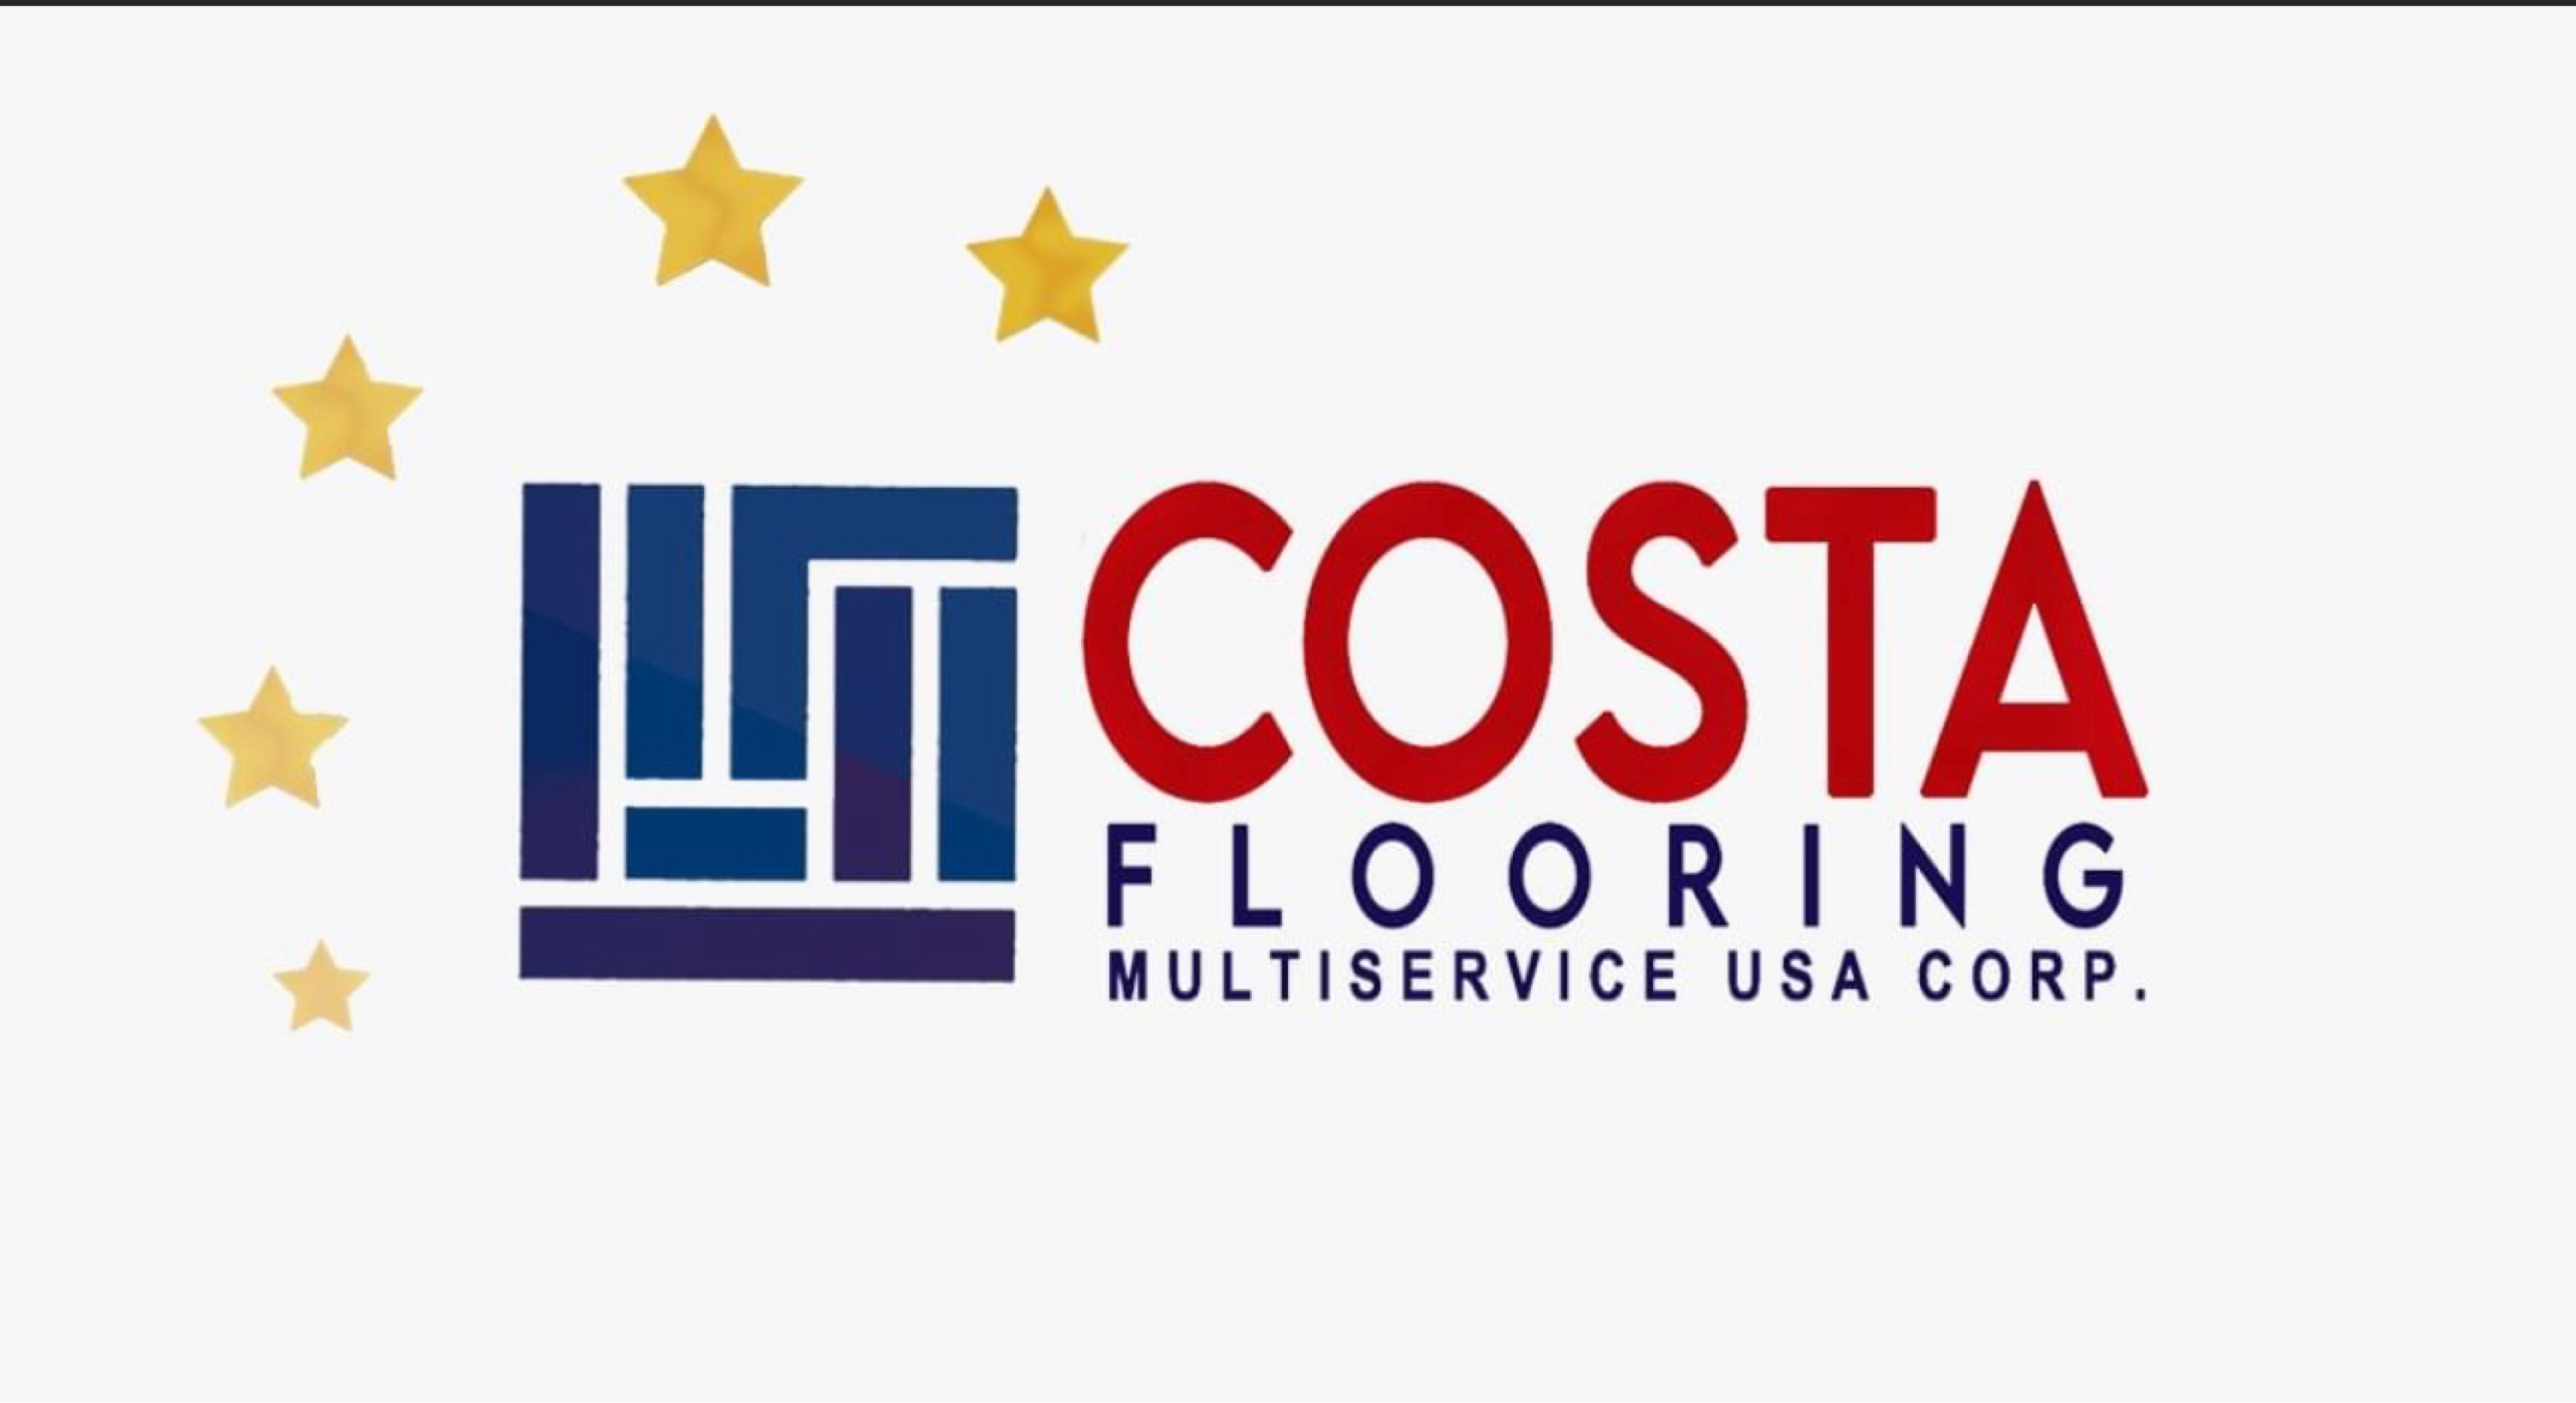 Costa Multiservice USA Corp. Logo